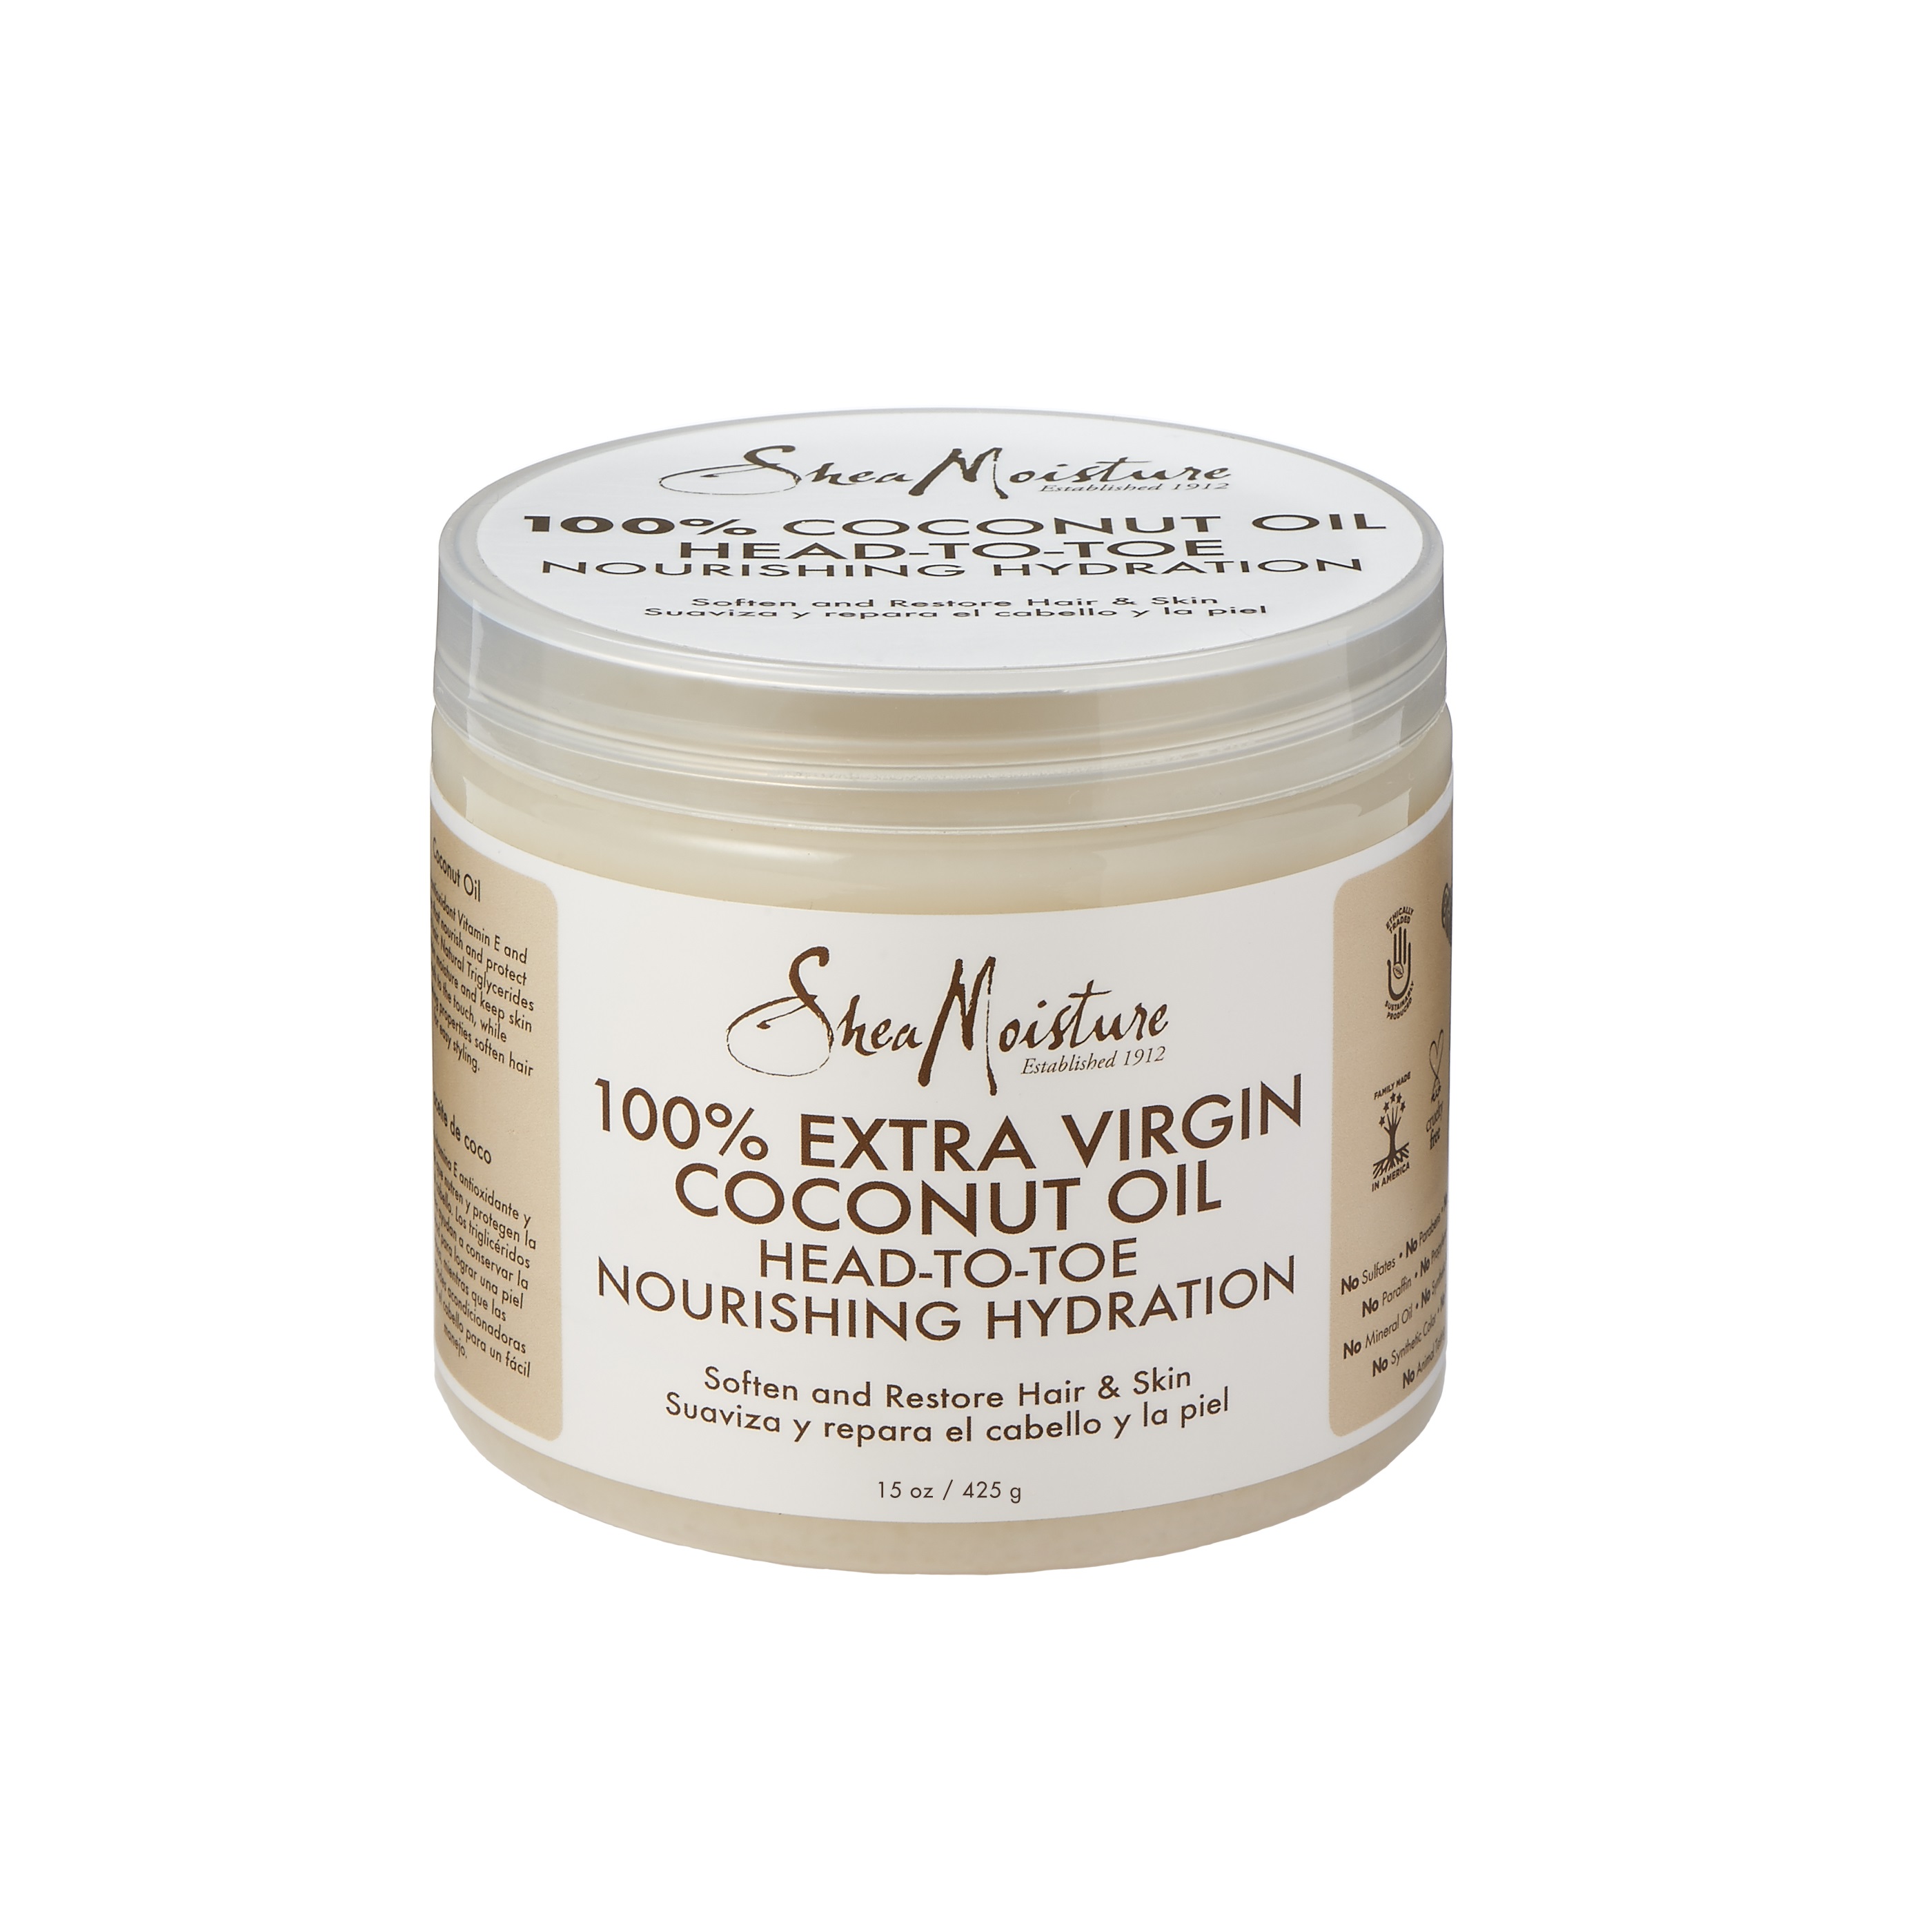 Shea Moisture 100% Extra Virgin Coconut Oil Head-To-Toe Nourishing Hydration